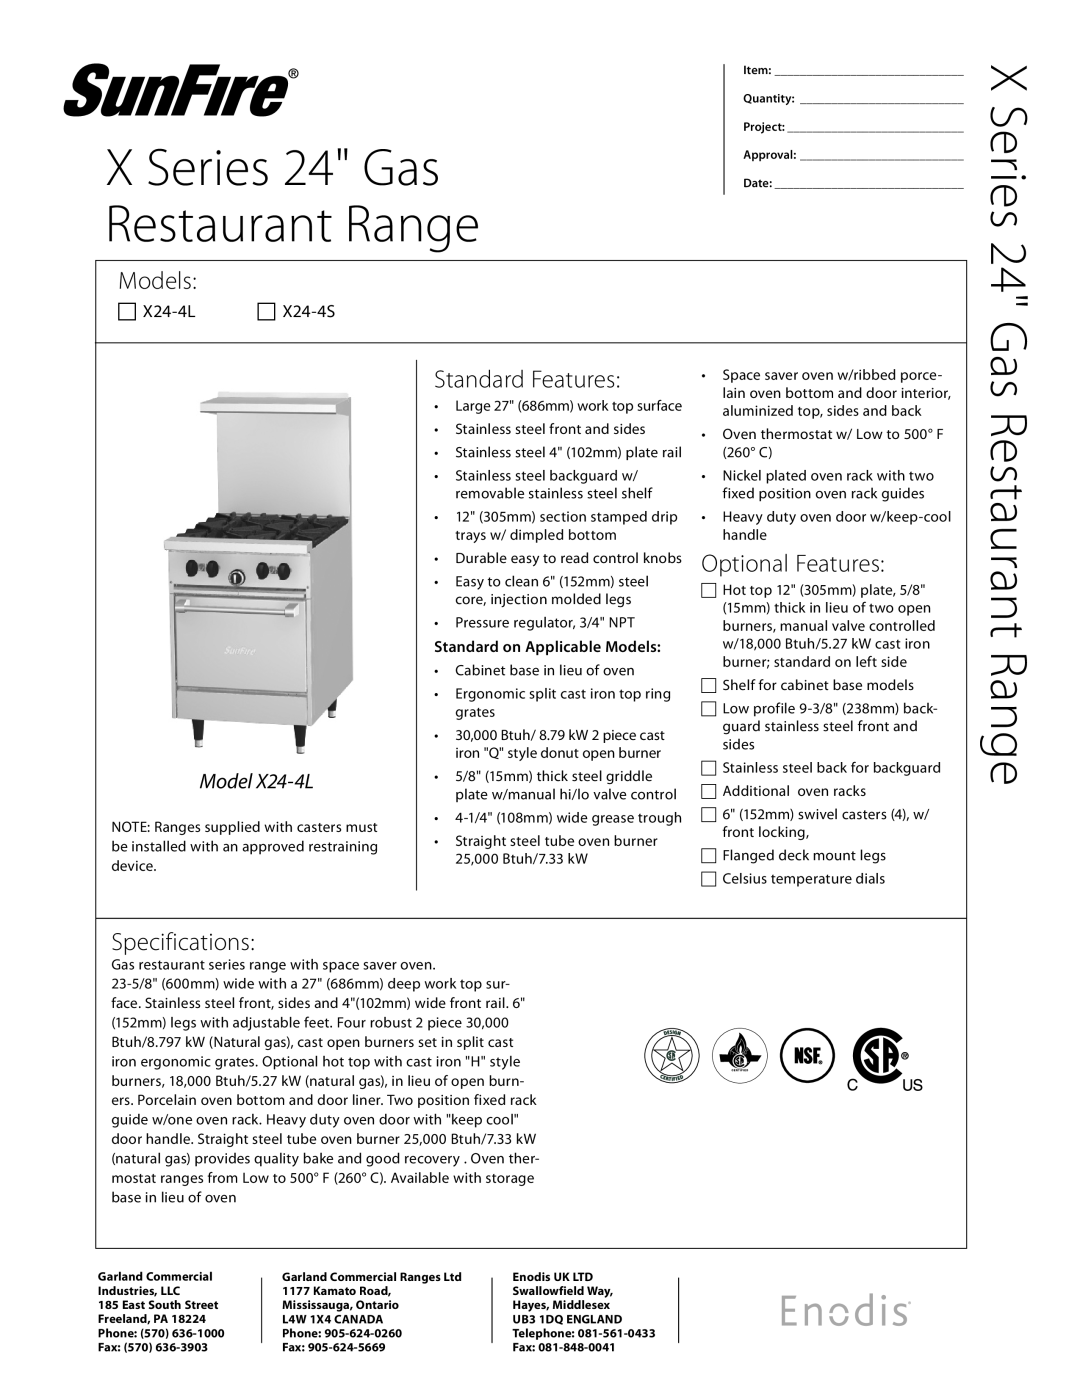 Sunfire X24-4L specifications X Series 24 Gas Restaurant Range, Models, Standard Features, Optional Features 